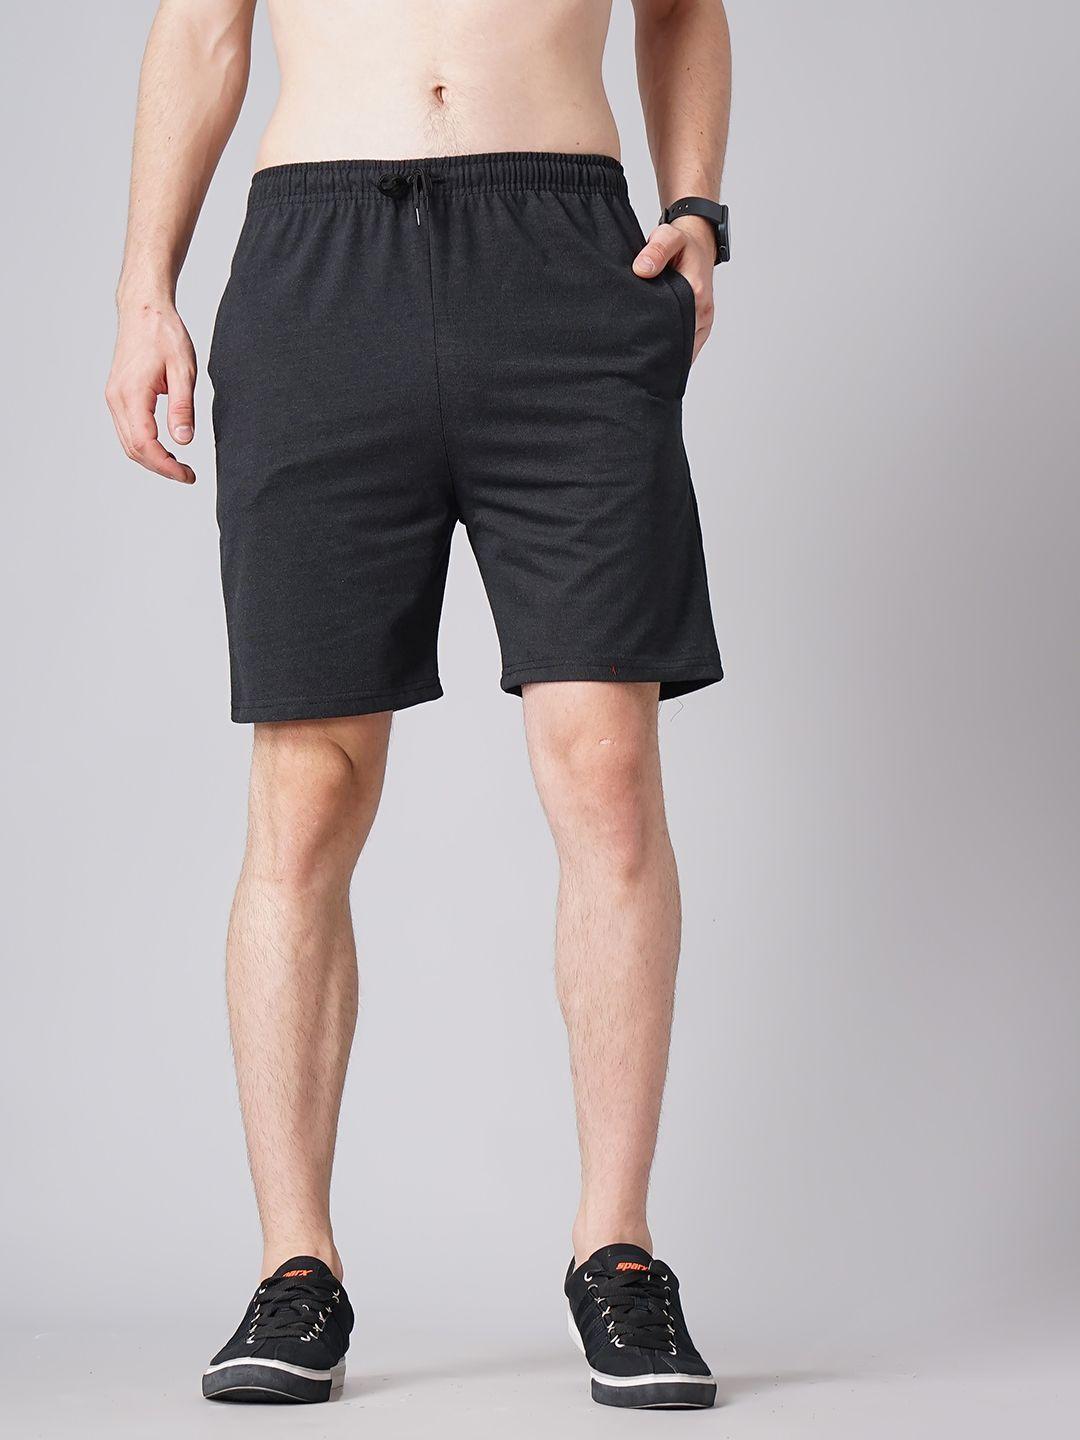 madsto-plus-size-men-slim-fit-cotton-sports-shorts